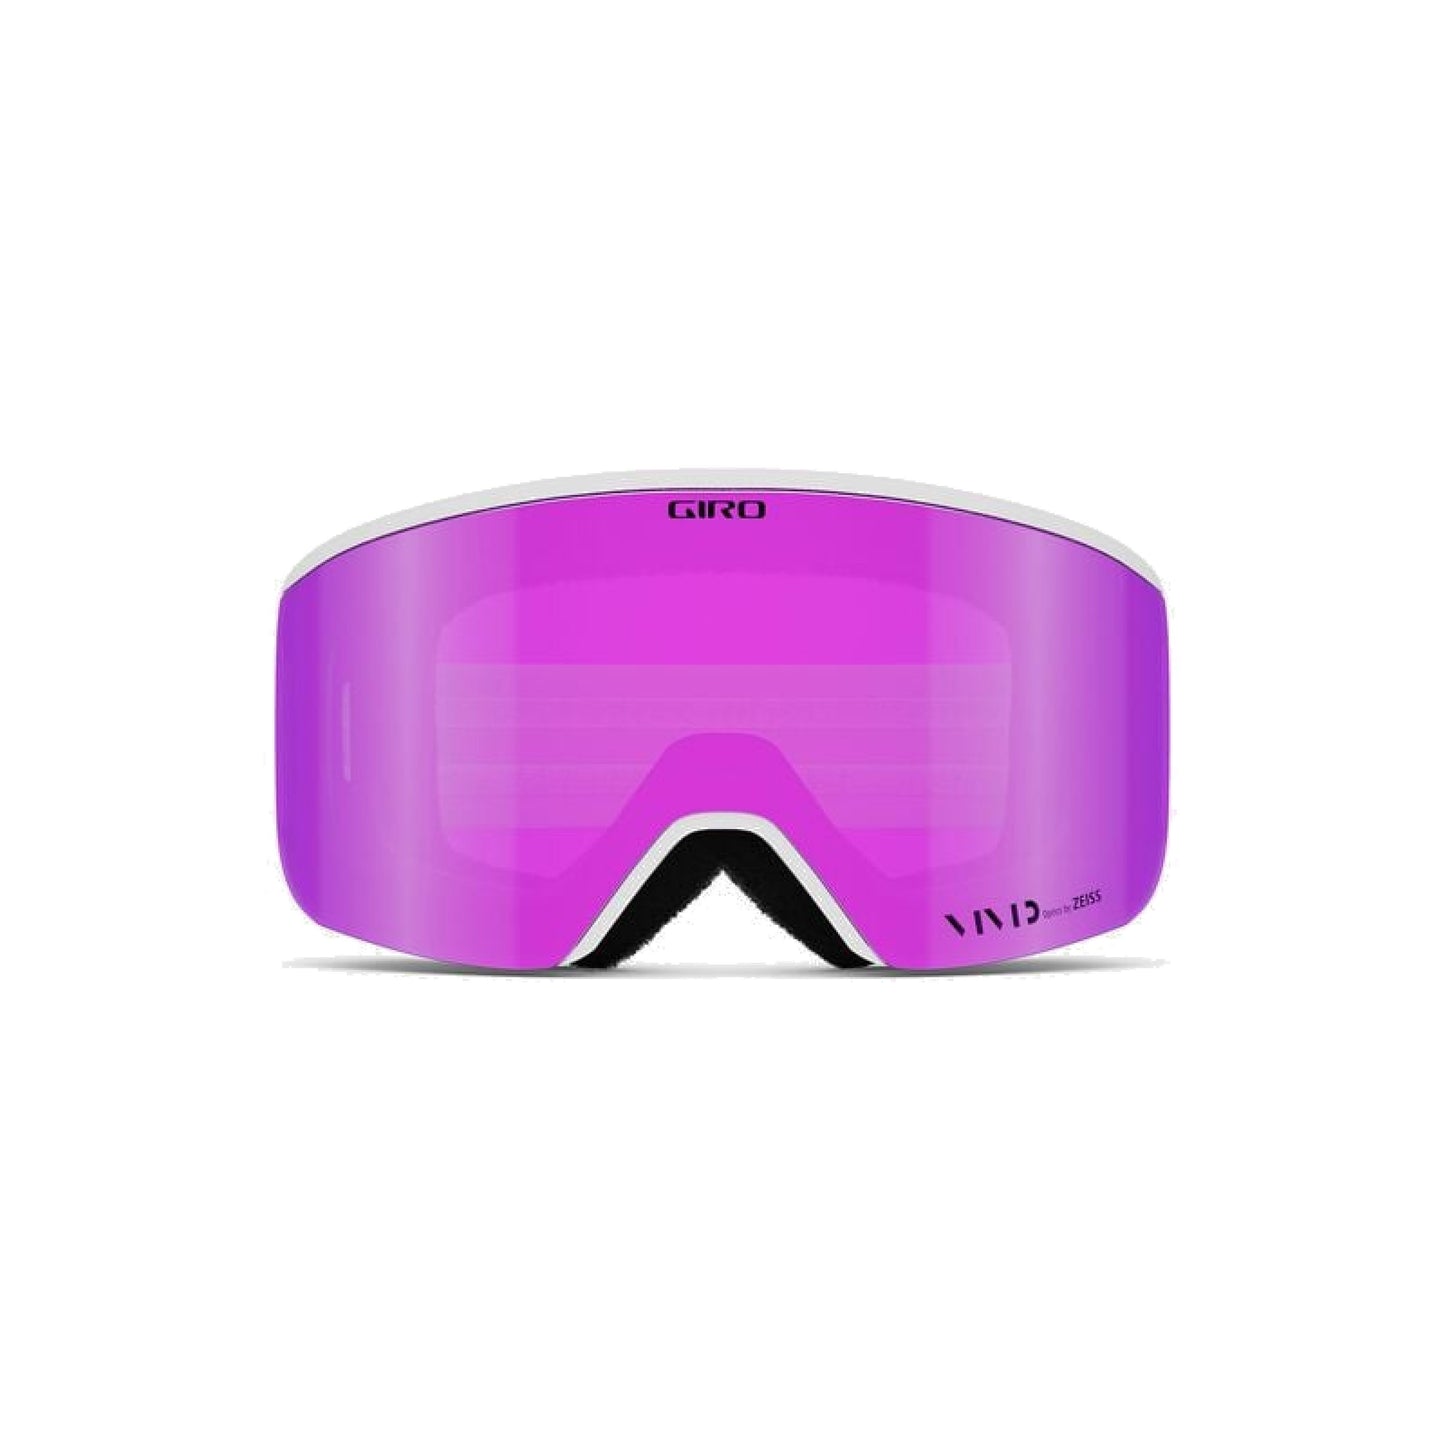 Giro Women's Ella Snow Goggles White Limitless Vivid Pink Snow Goggles